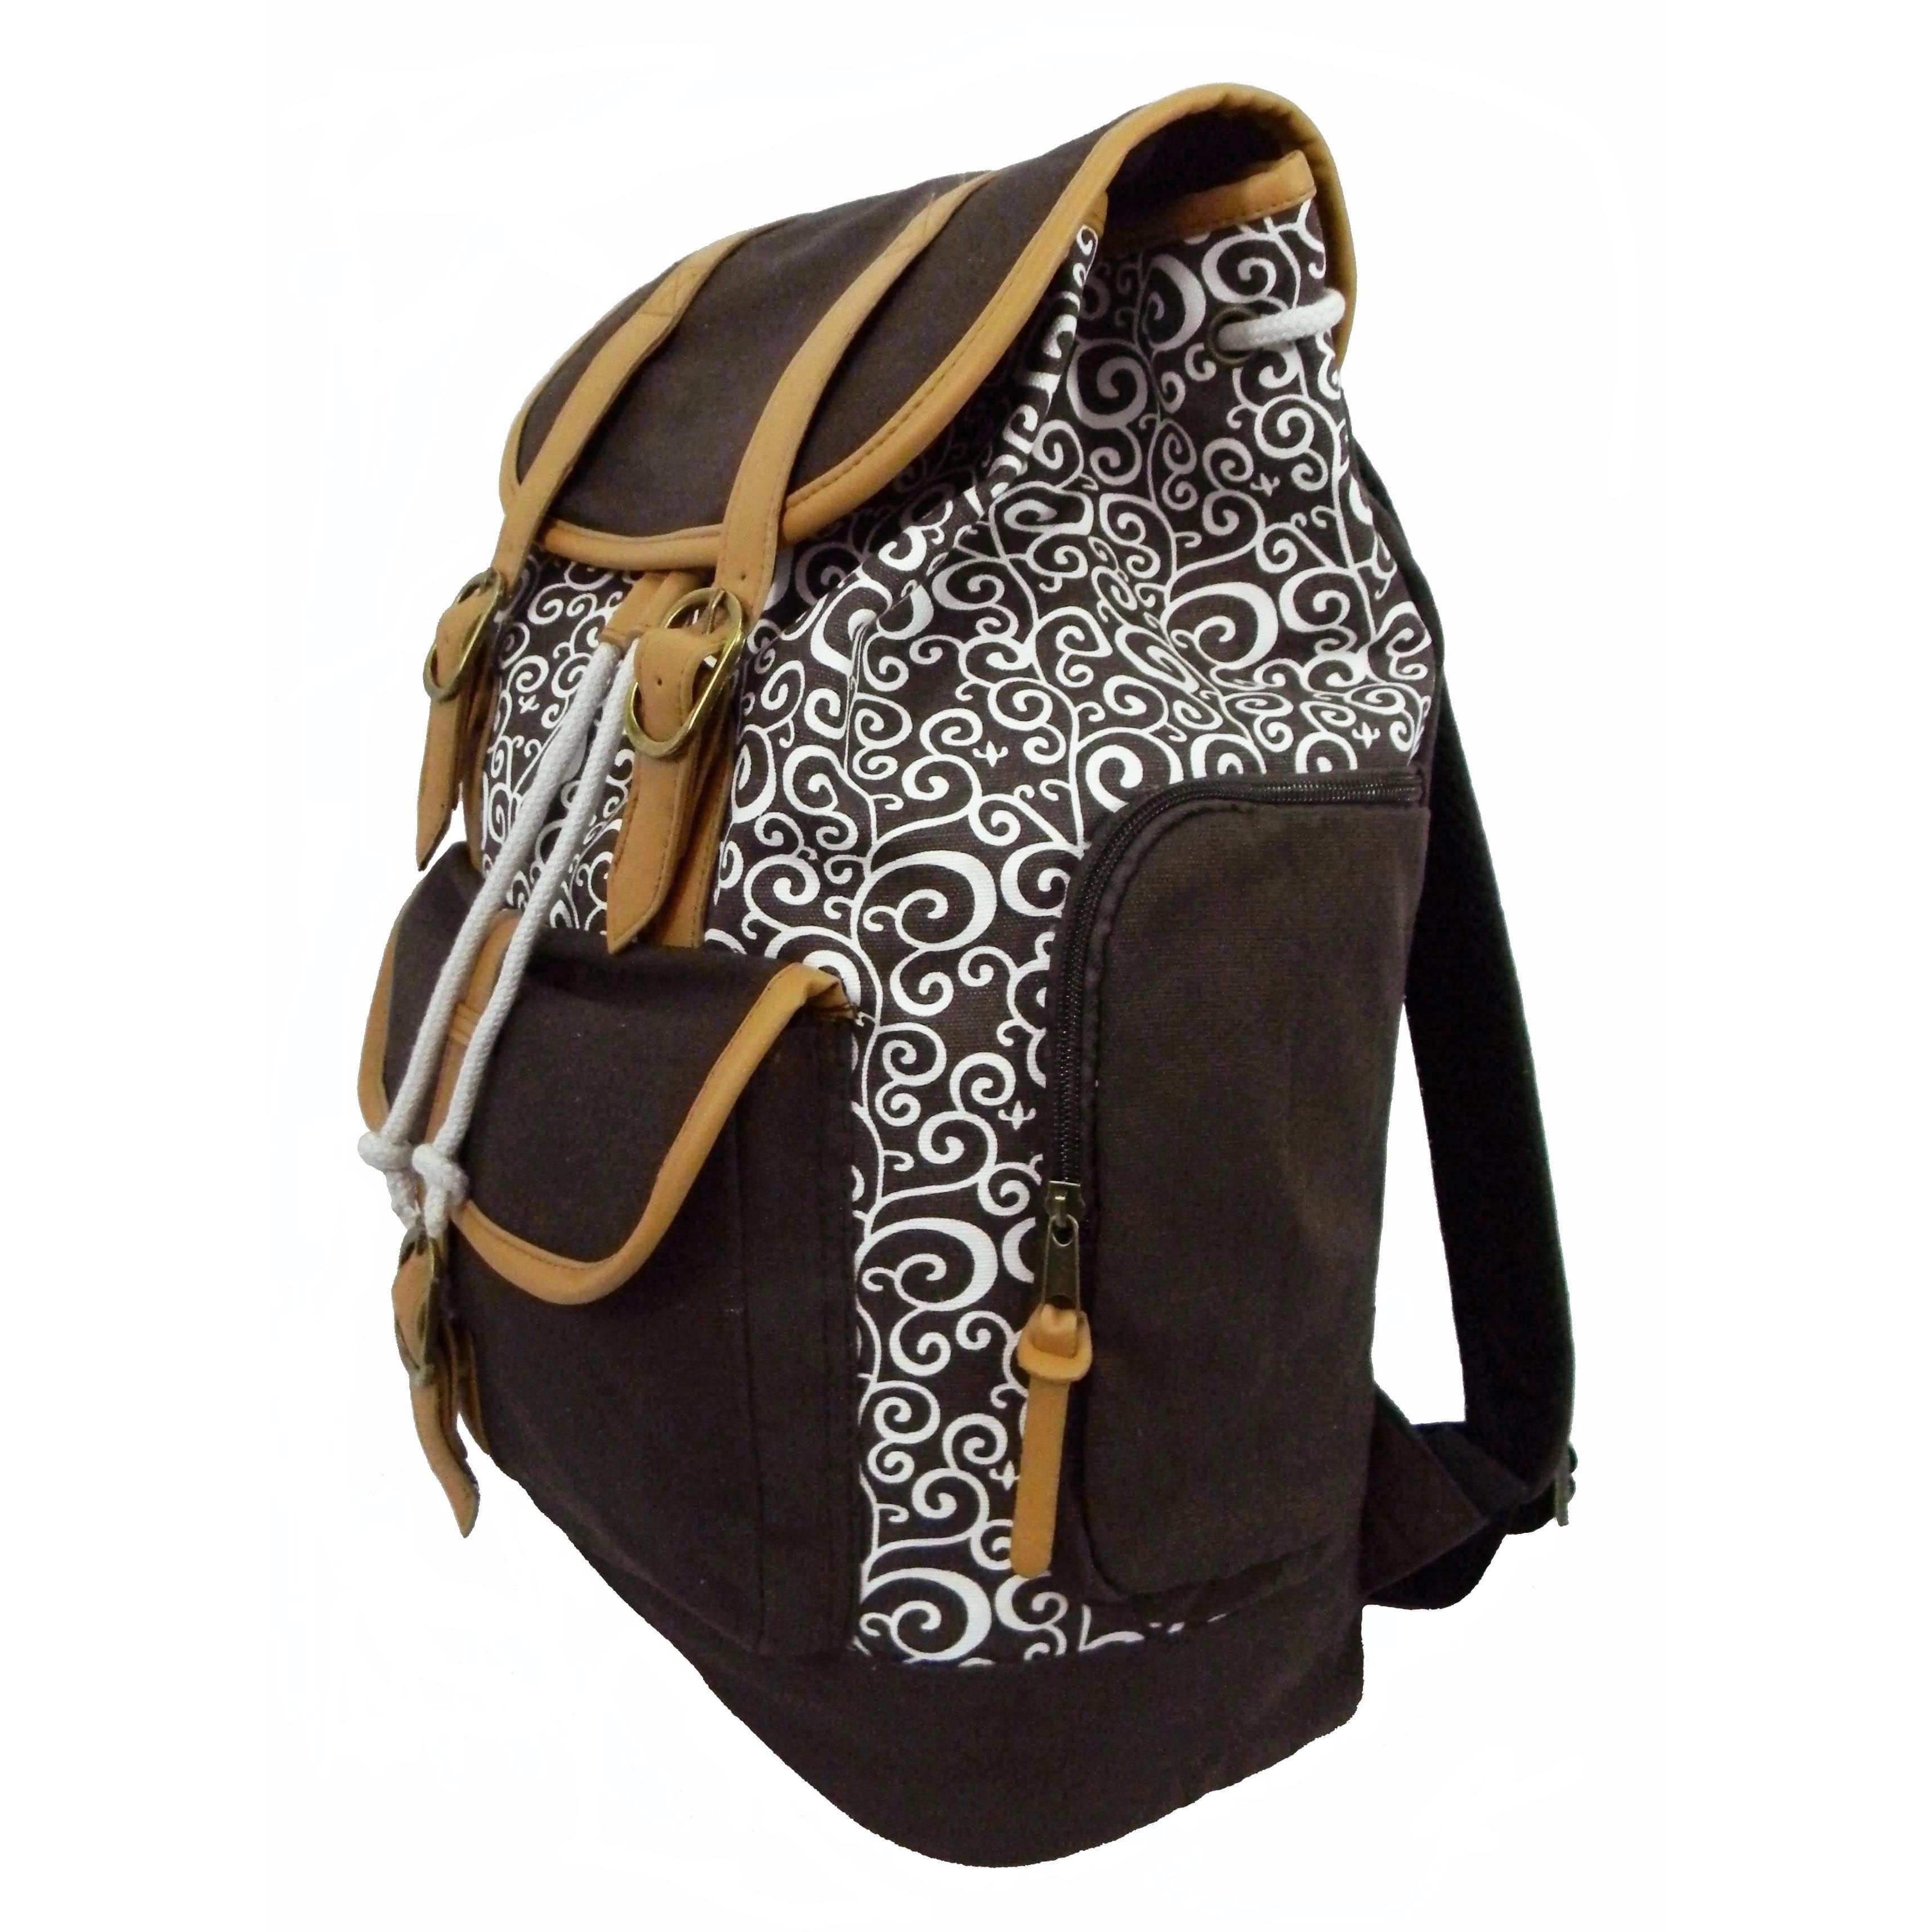 Men Laptop Backpack Canvas School Bag Travel Backpacks Notebook Bagpack Knapsack Bags New-Gray_China